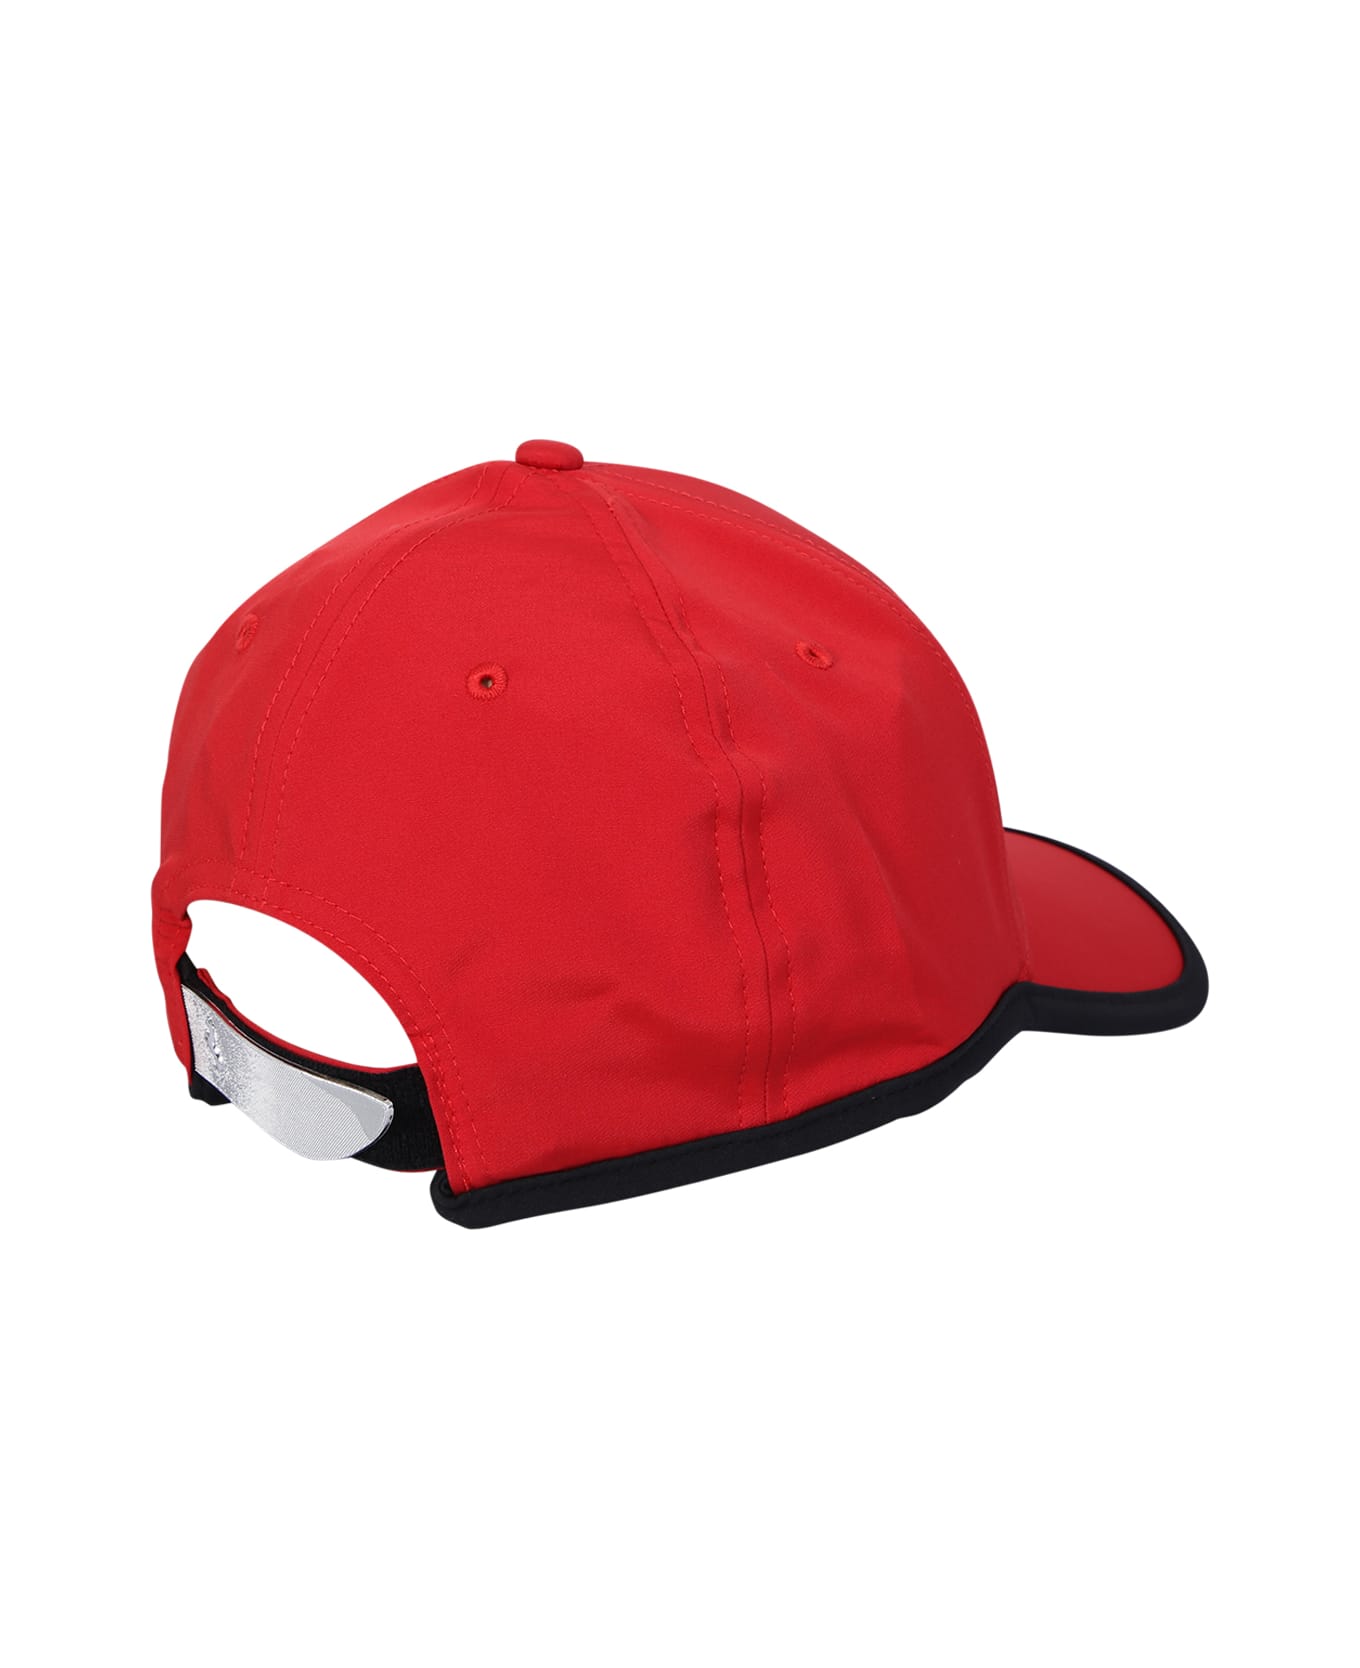 Ferrari Bright Red Cap - Red